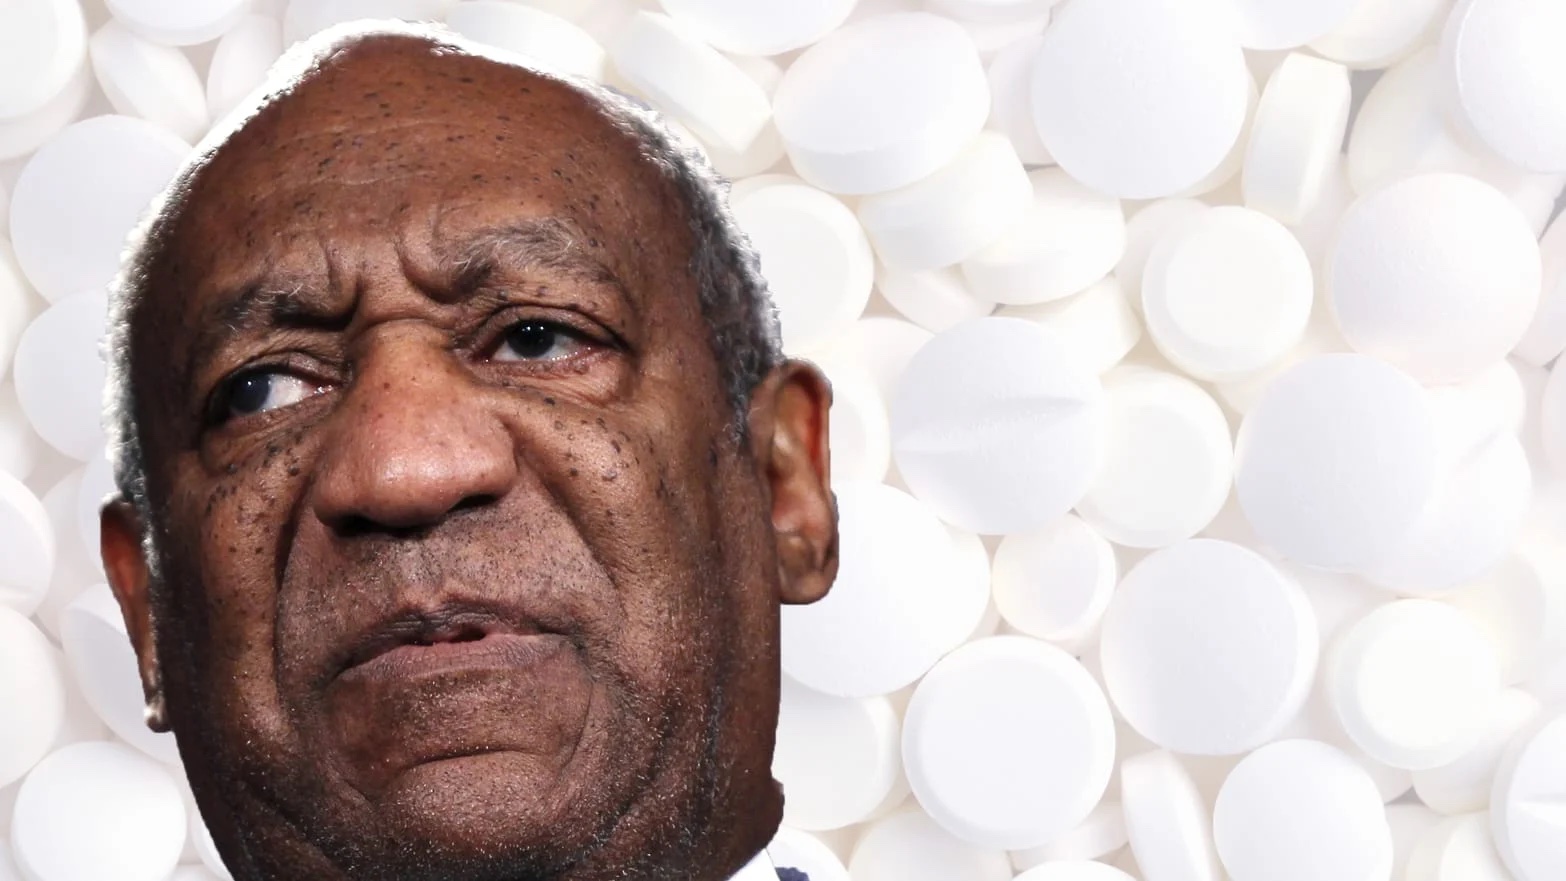 Pill Cosby